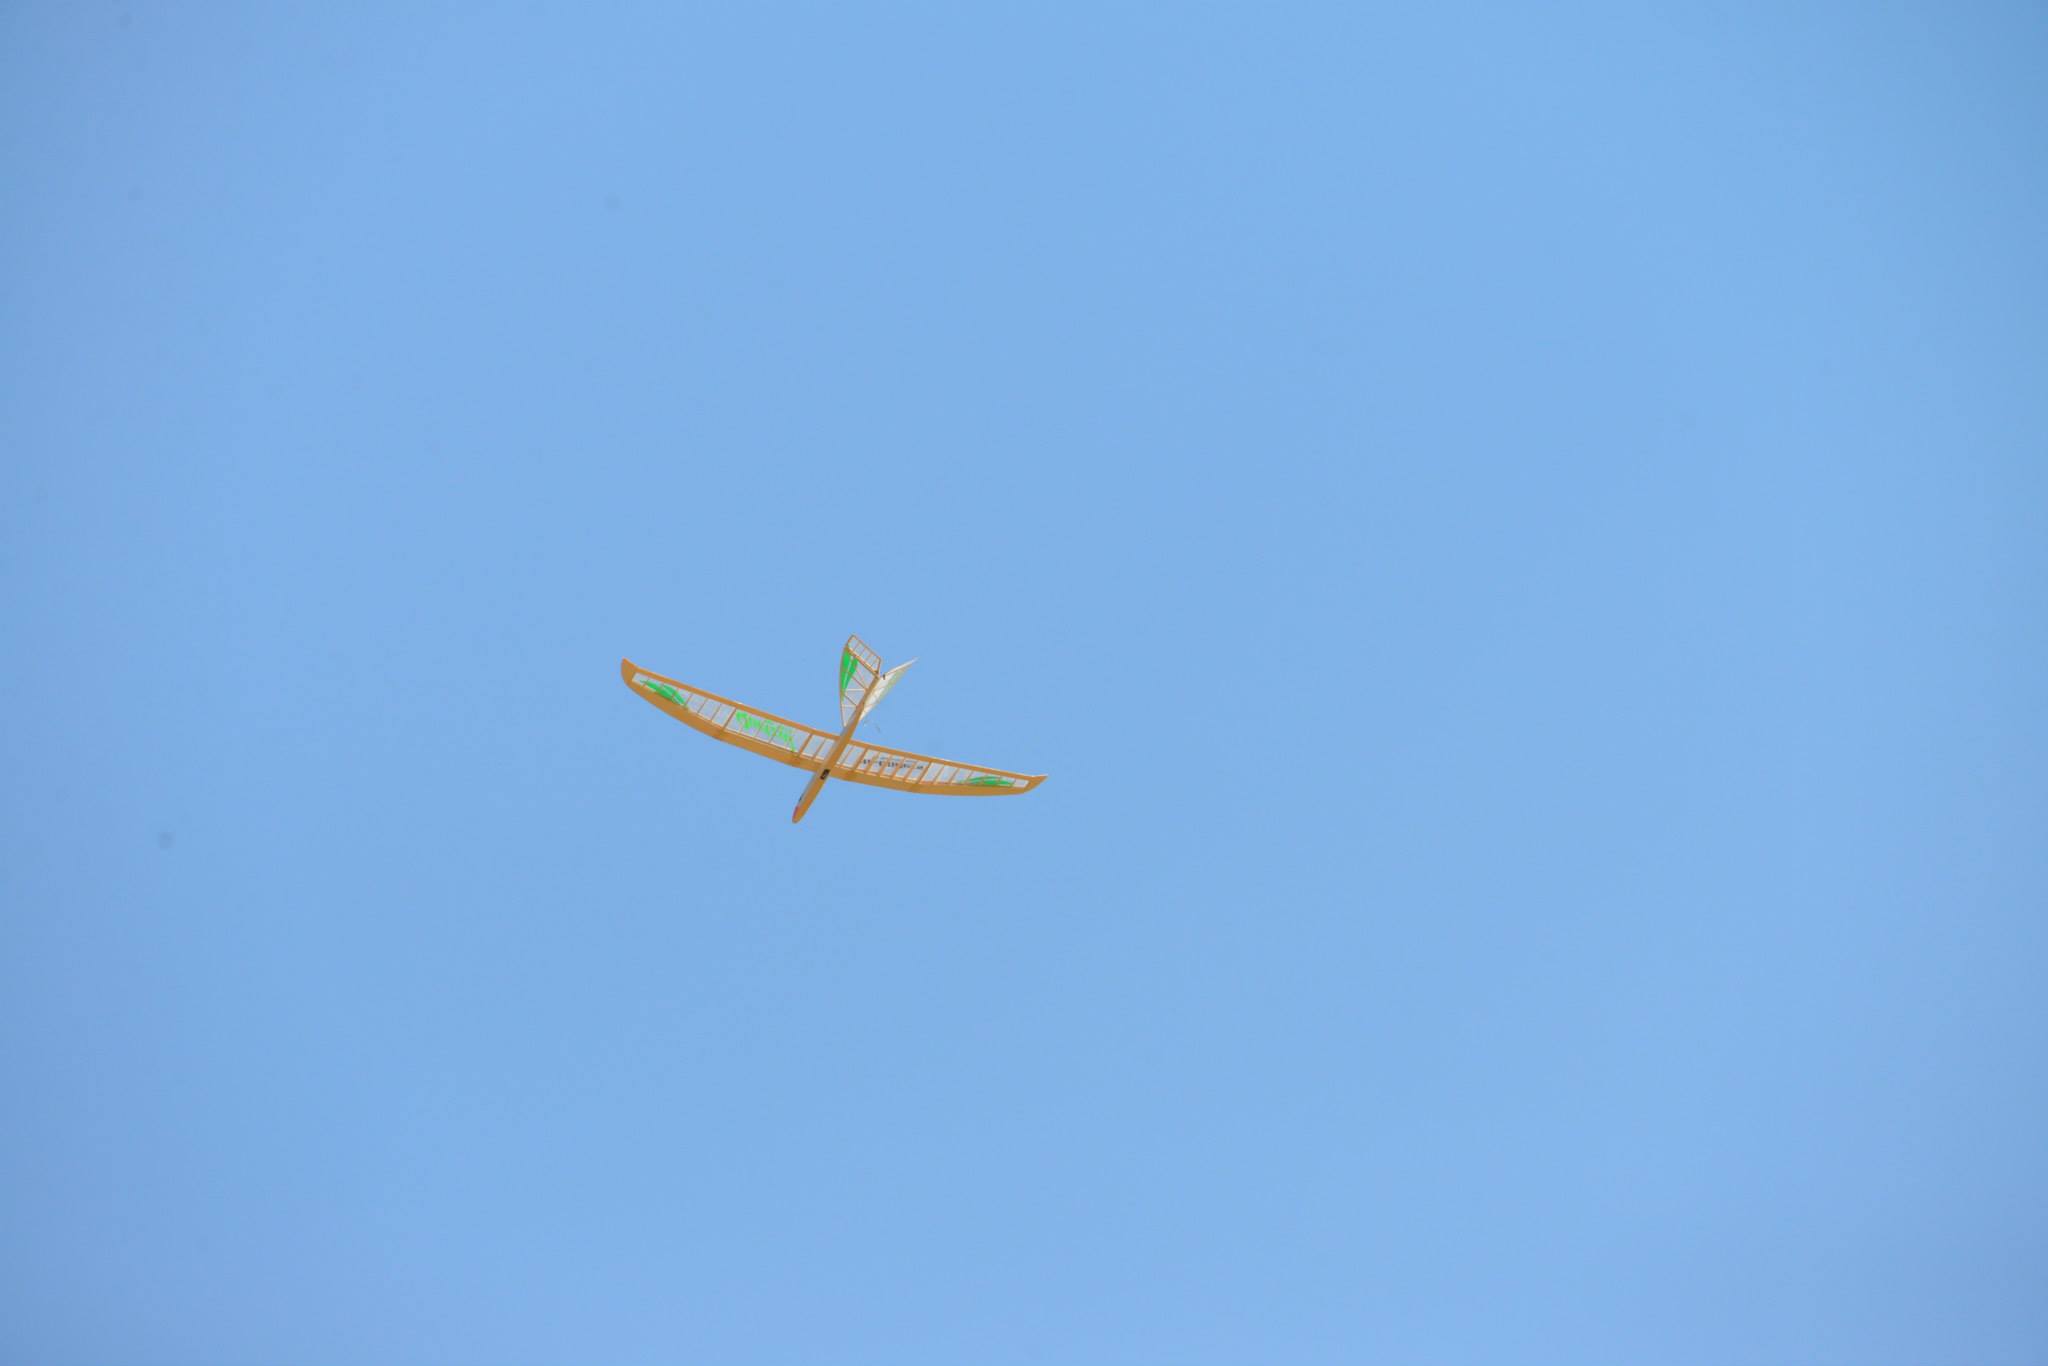 Mücke (Mosquito) 3 gliders